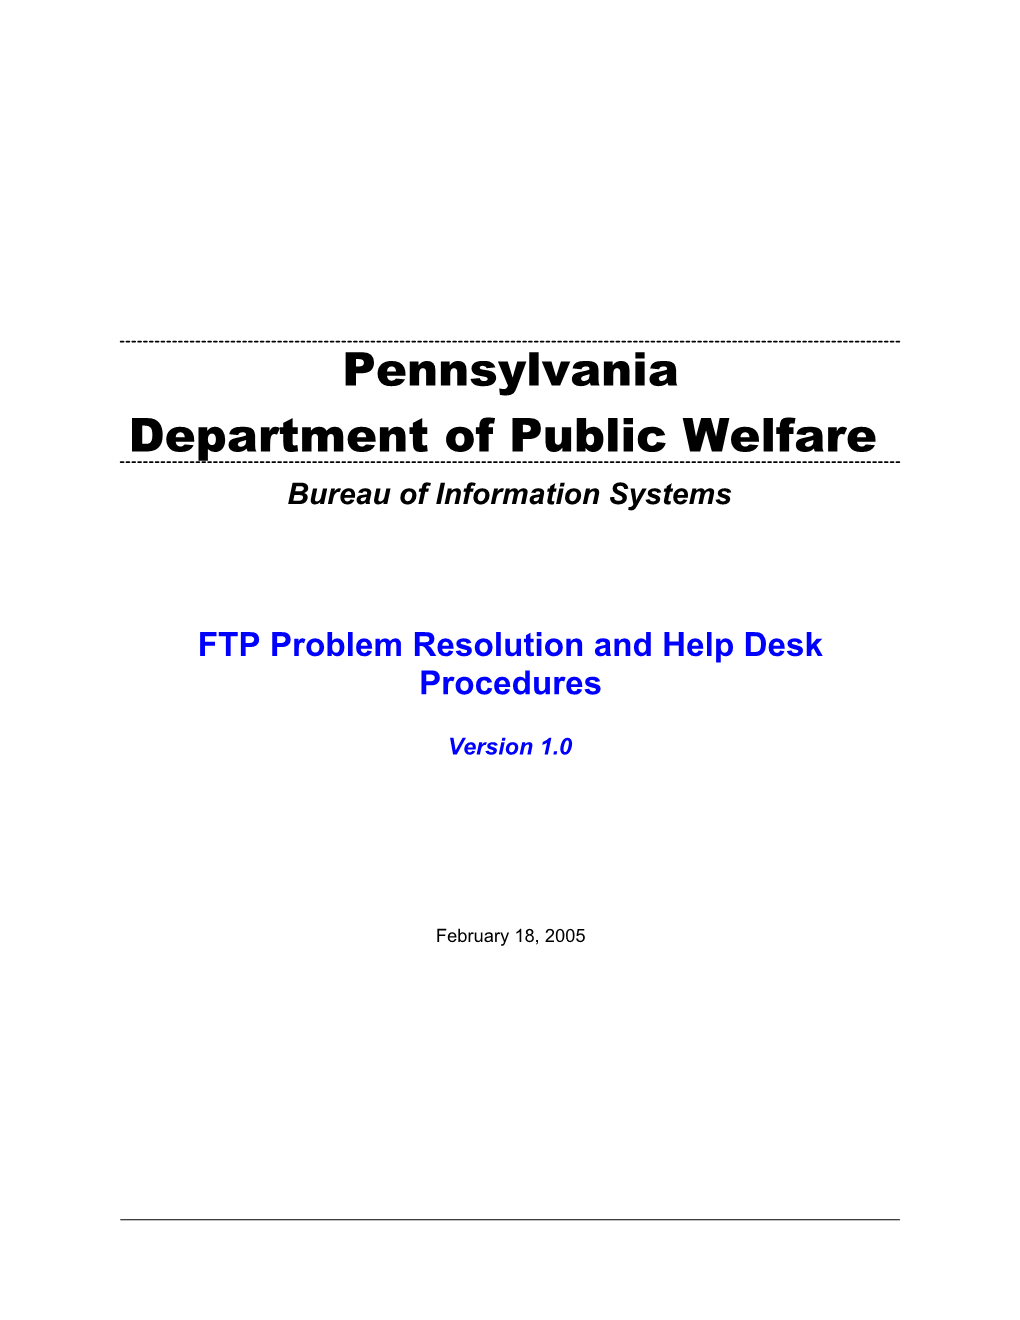 FTP Problem Resolution and Help Desk Procedures